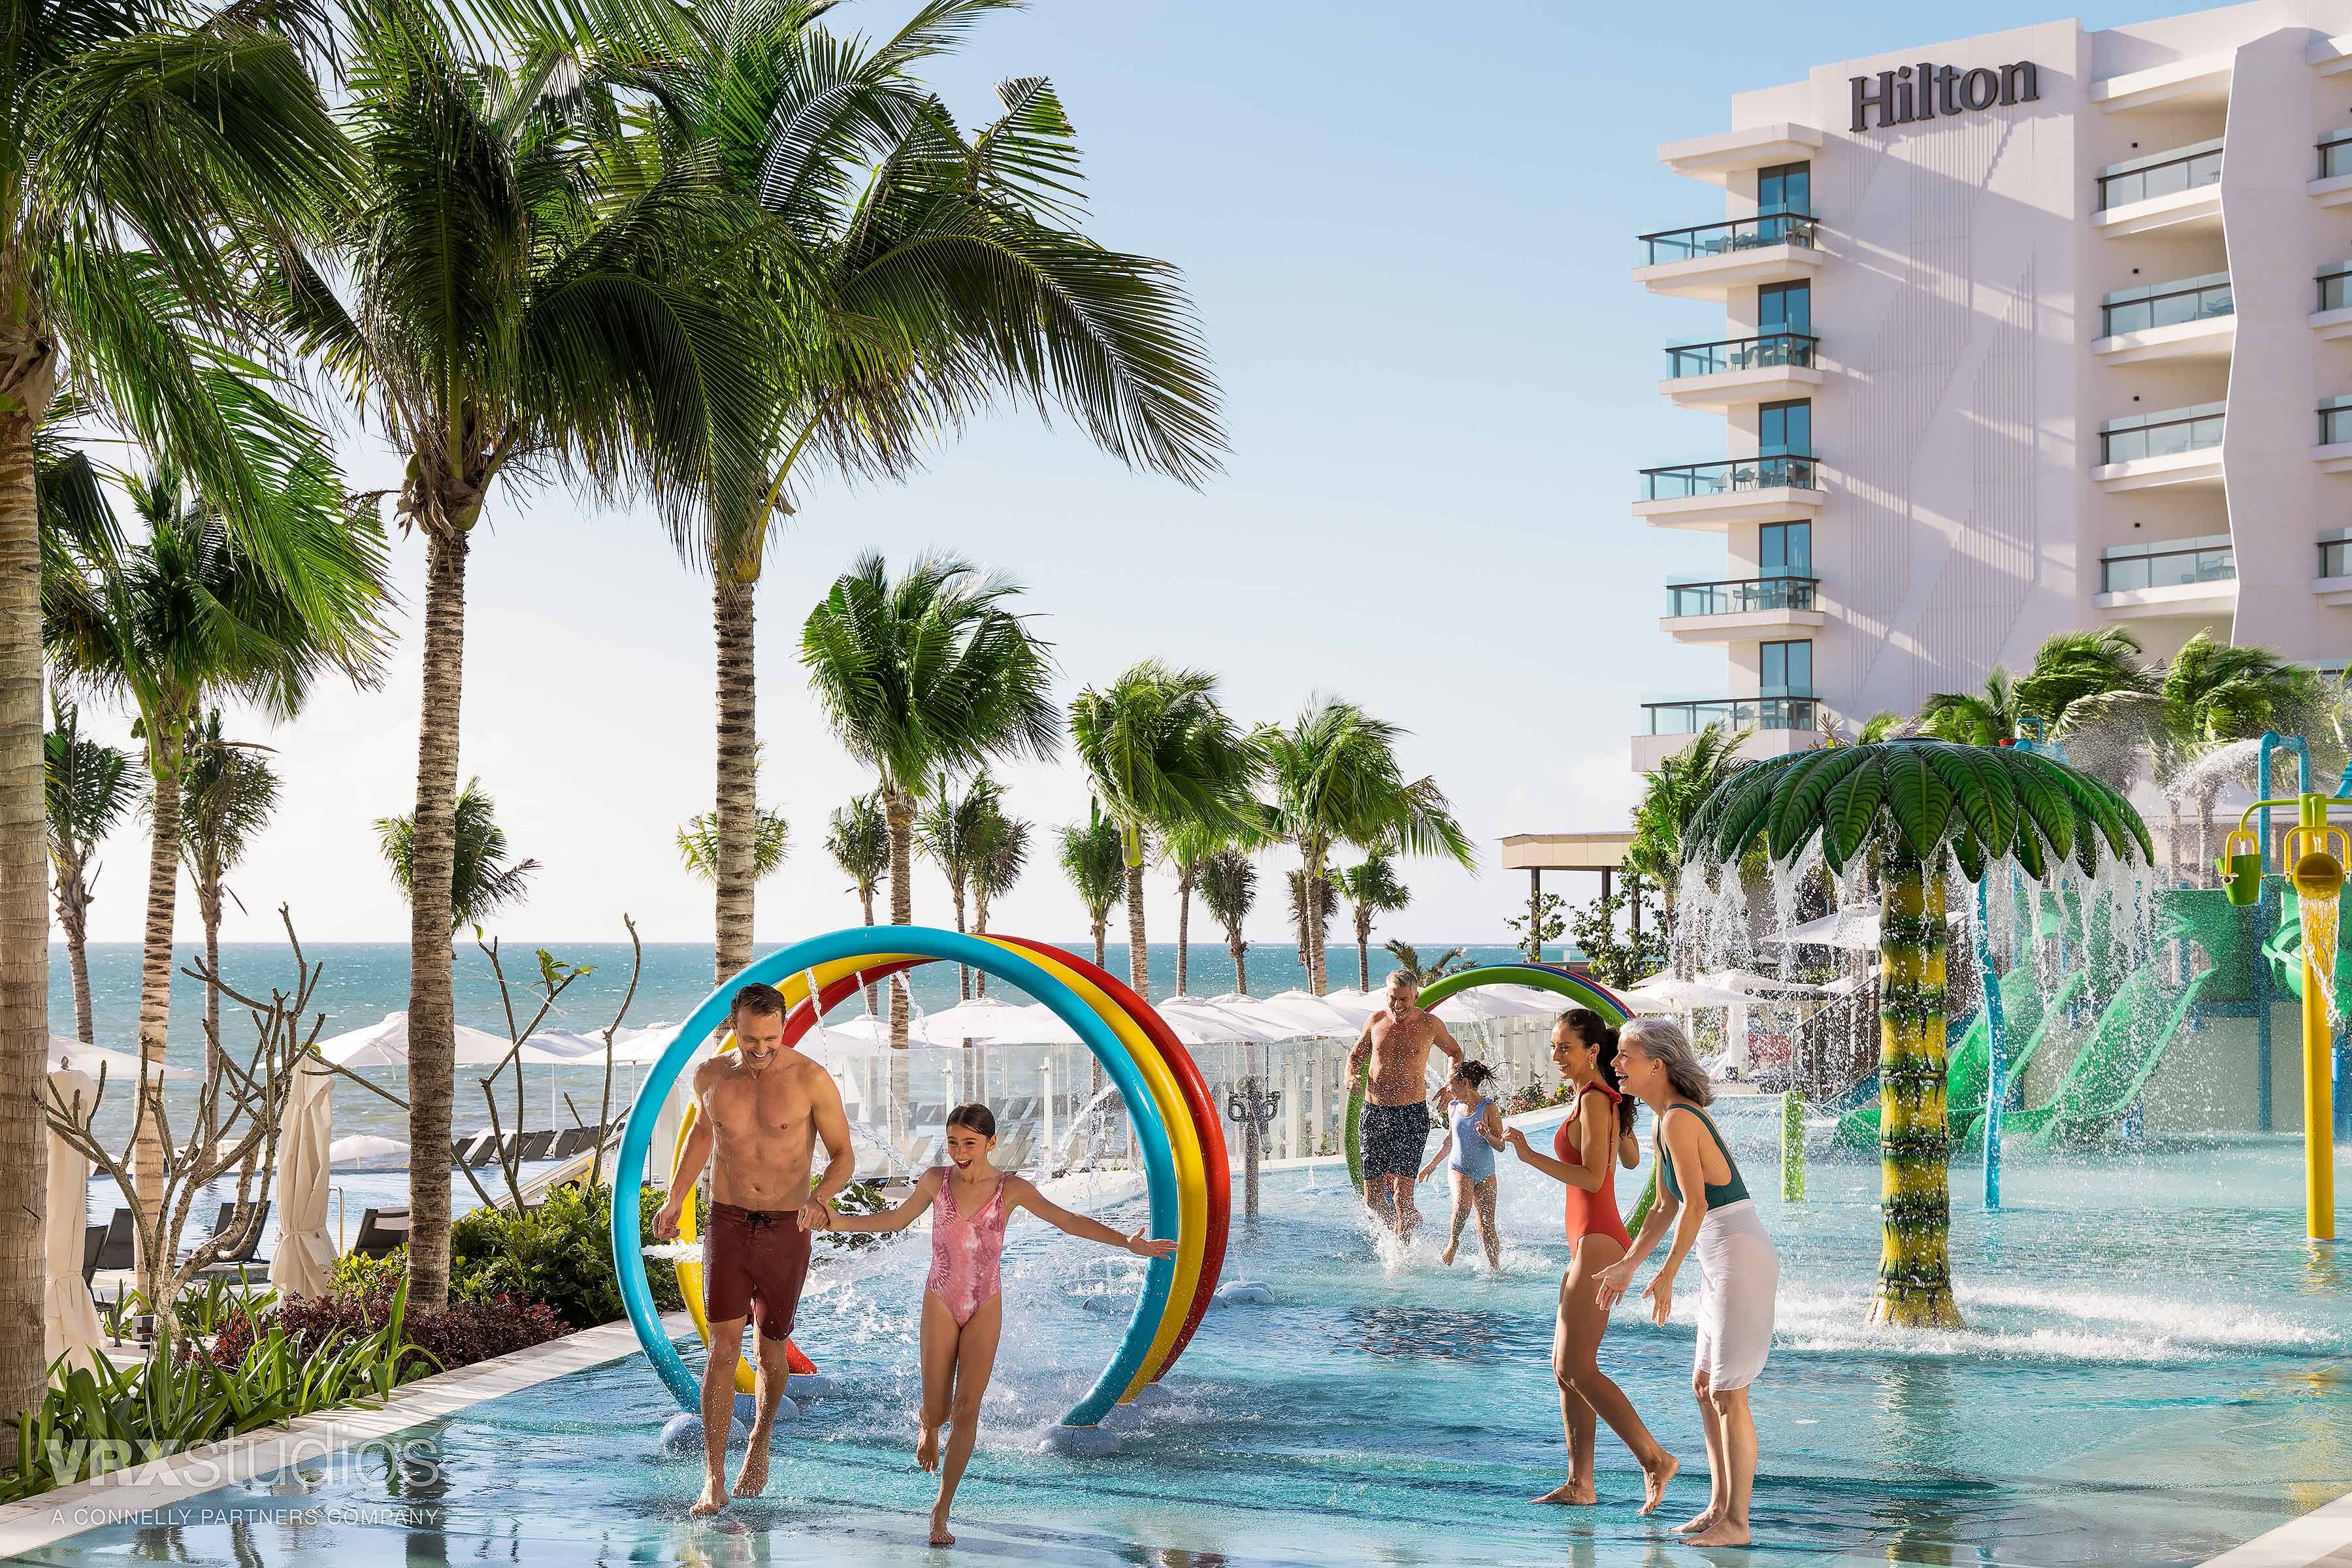 Hilton-Destination-Marketing-Corporate---Cancun-Brand-Shoot---Waterpark---Family---1498800.jpg